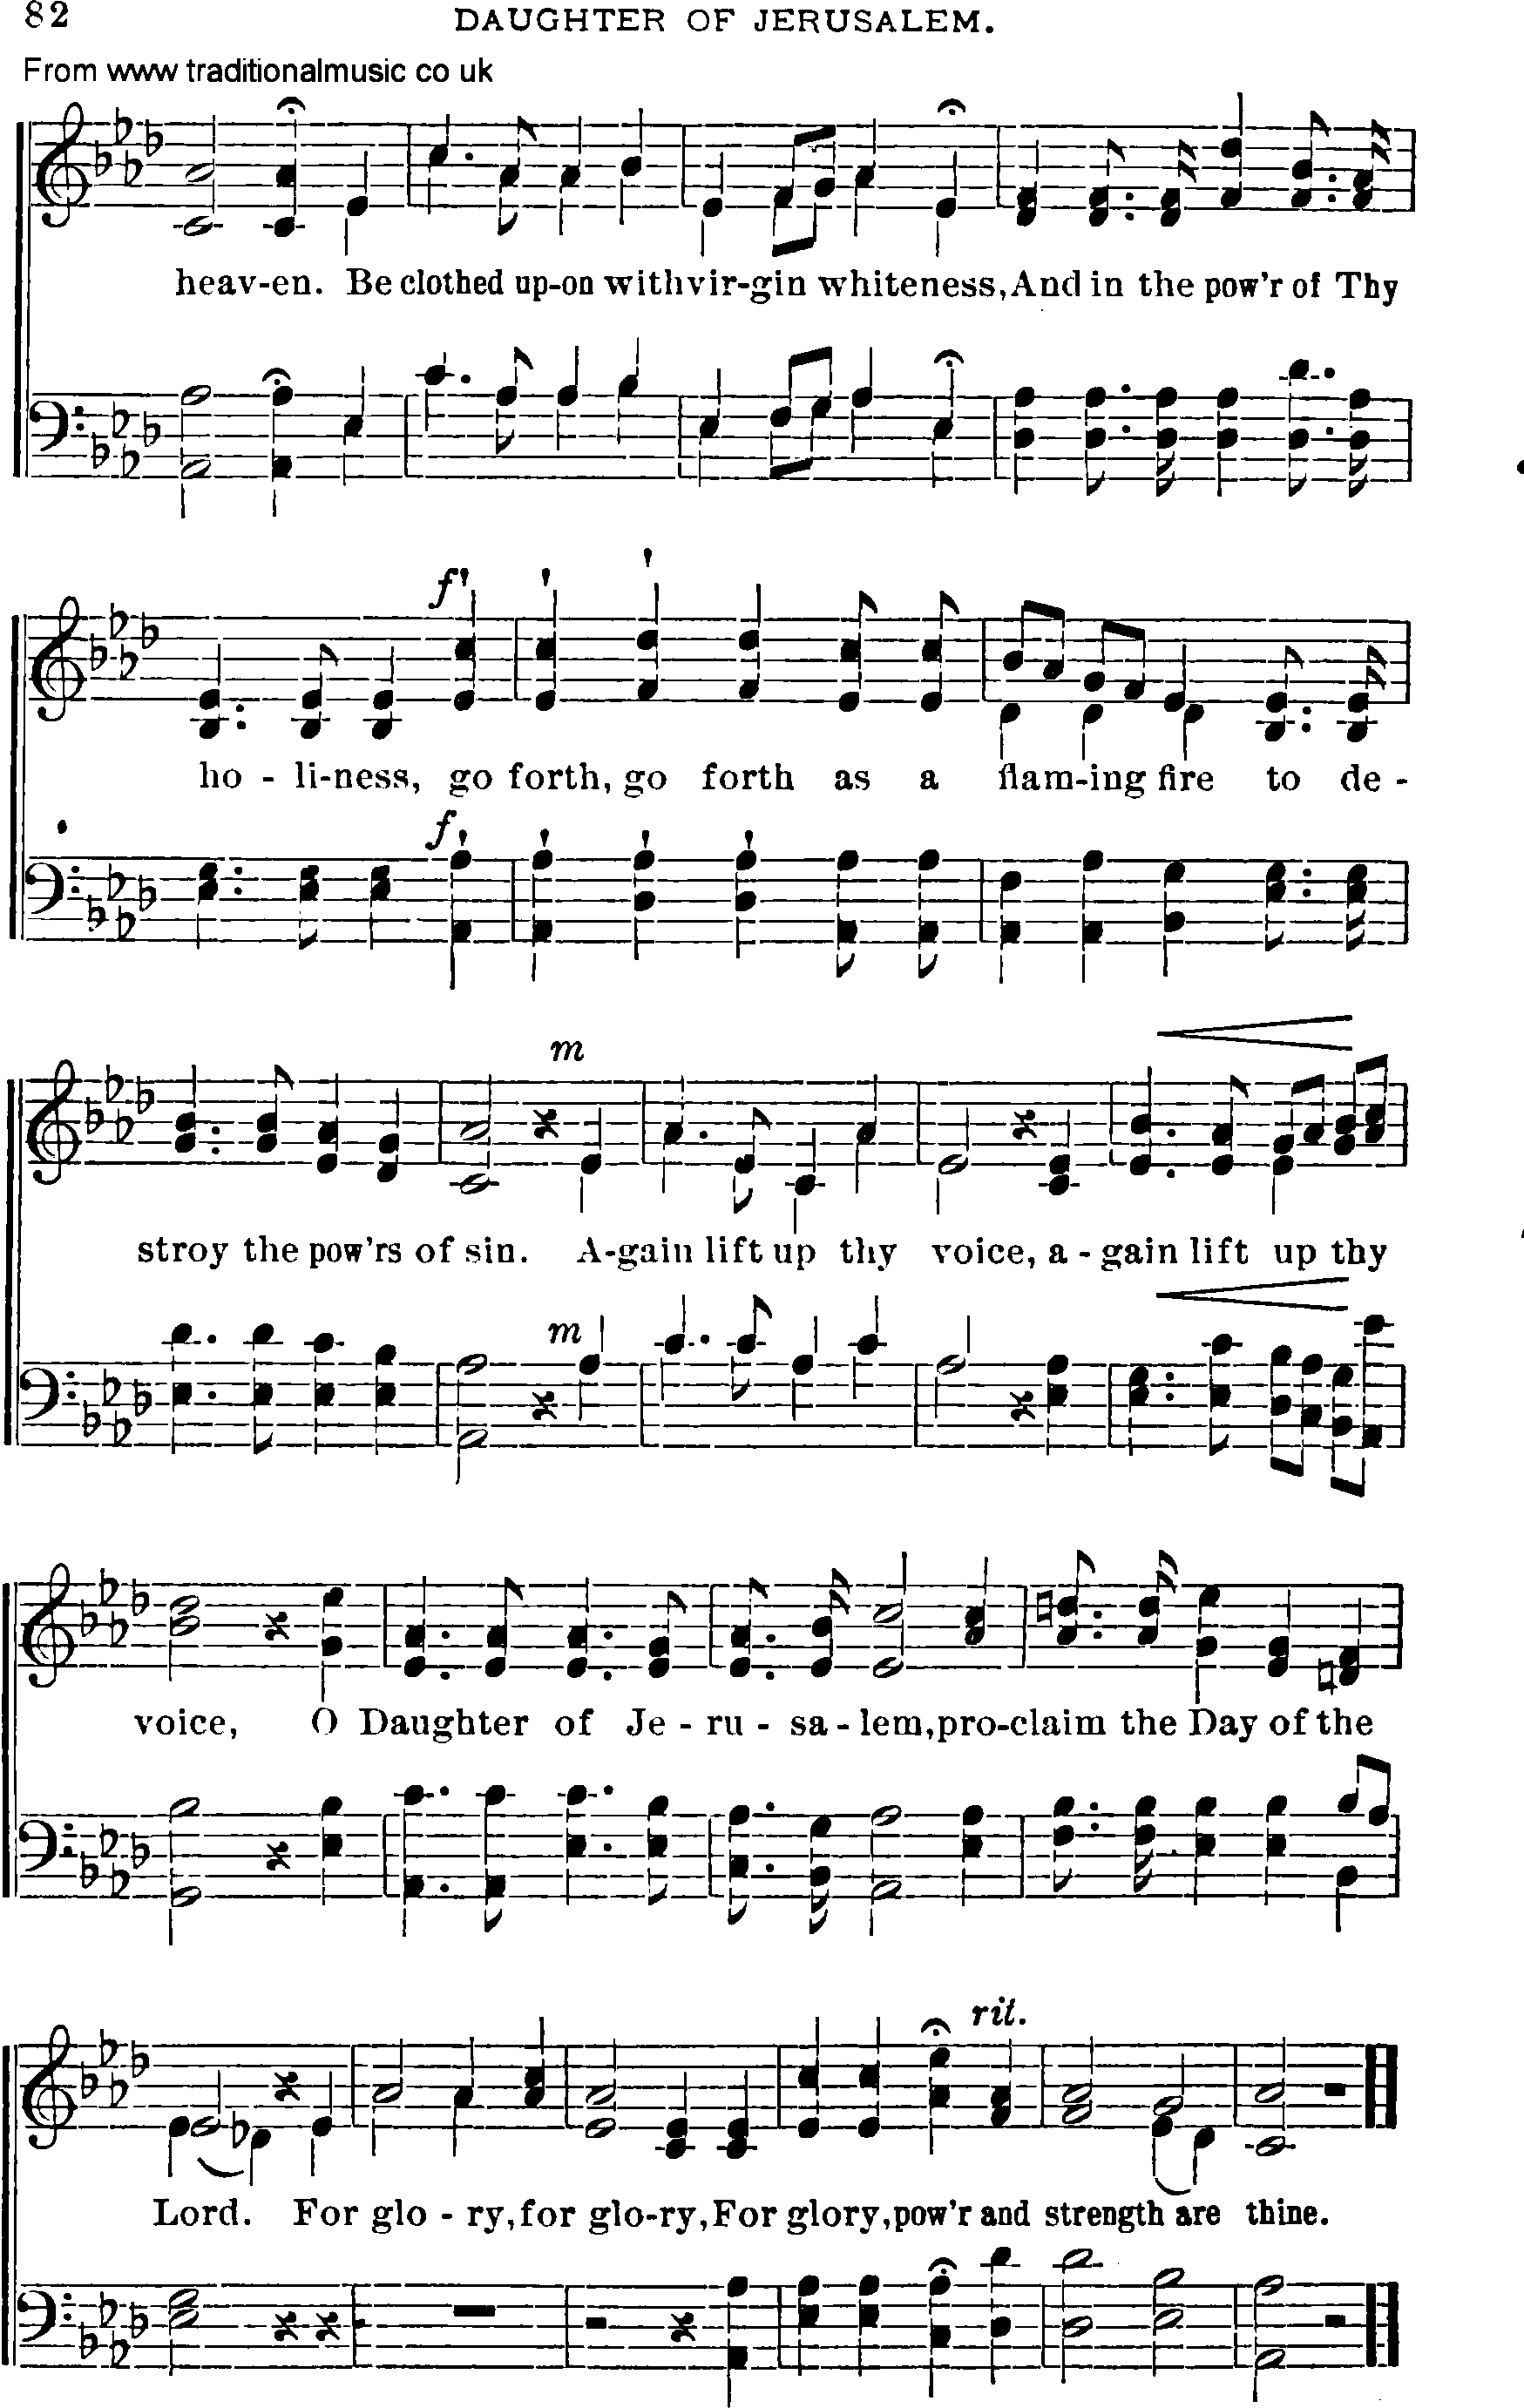 Shaker Music collection, Hymn: daughter of jerusalem, sheetmusic and PDF